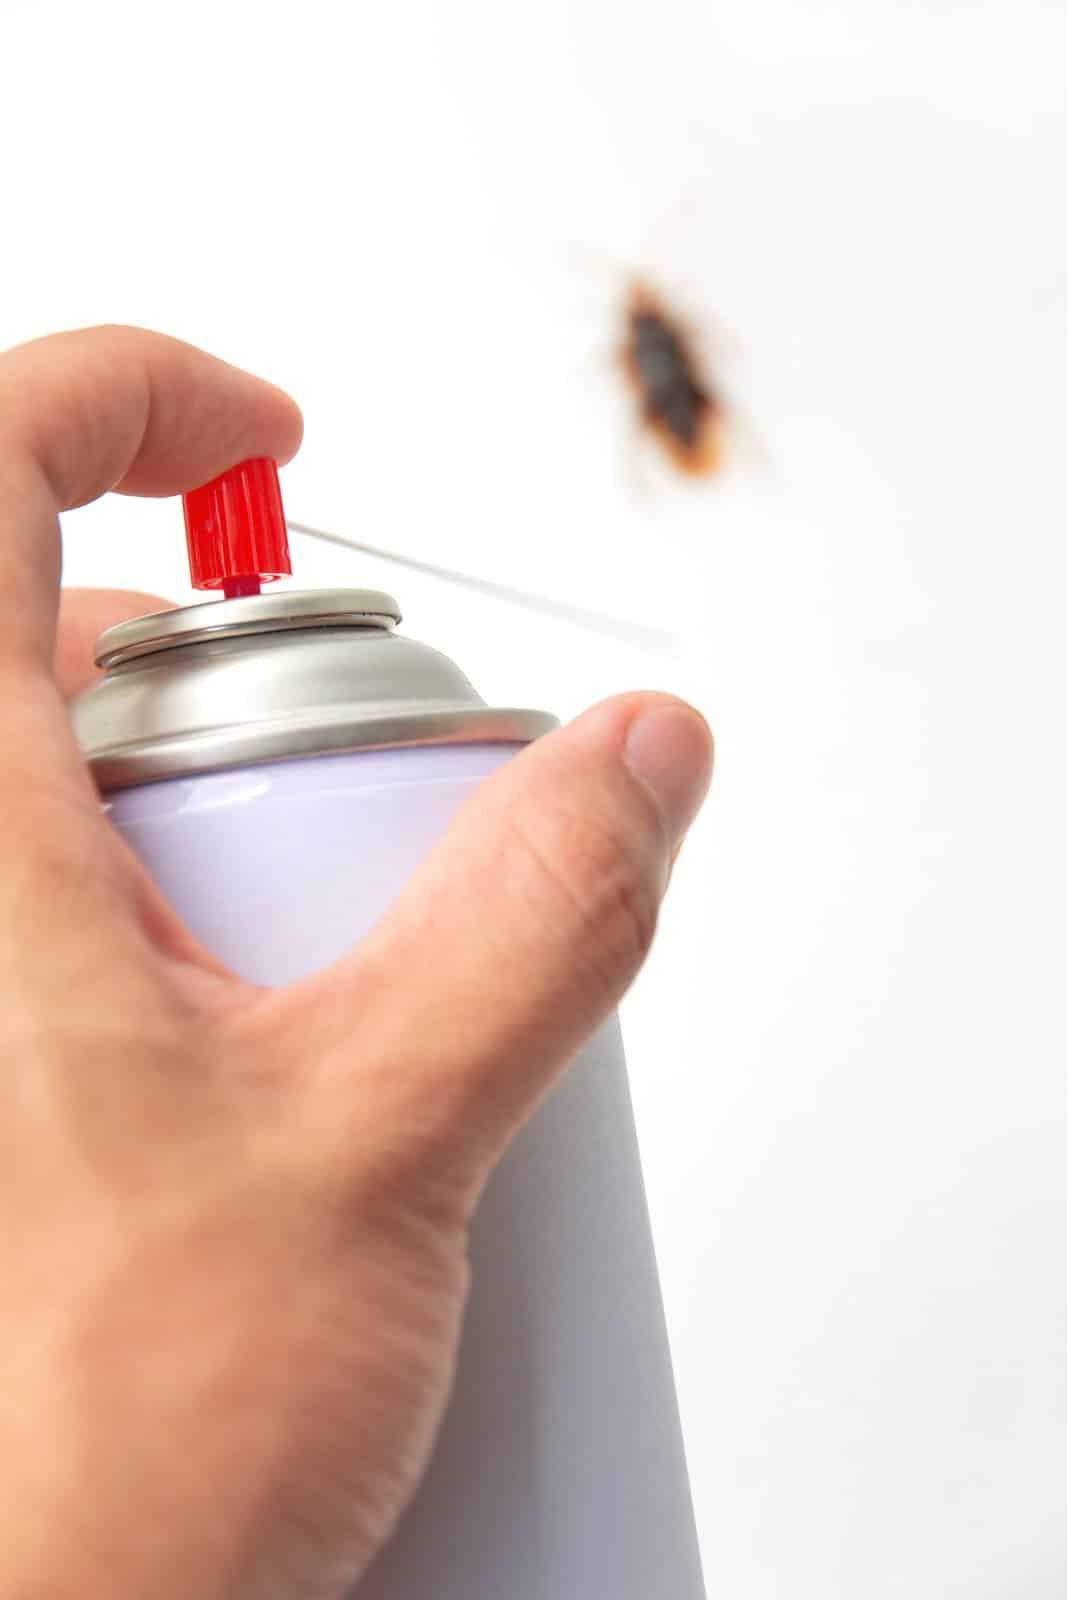 diy pest control sprayer - hygienedunia blog